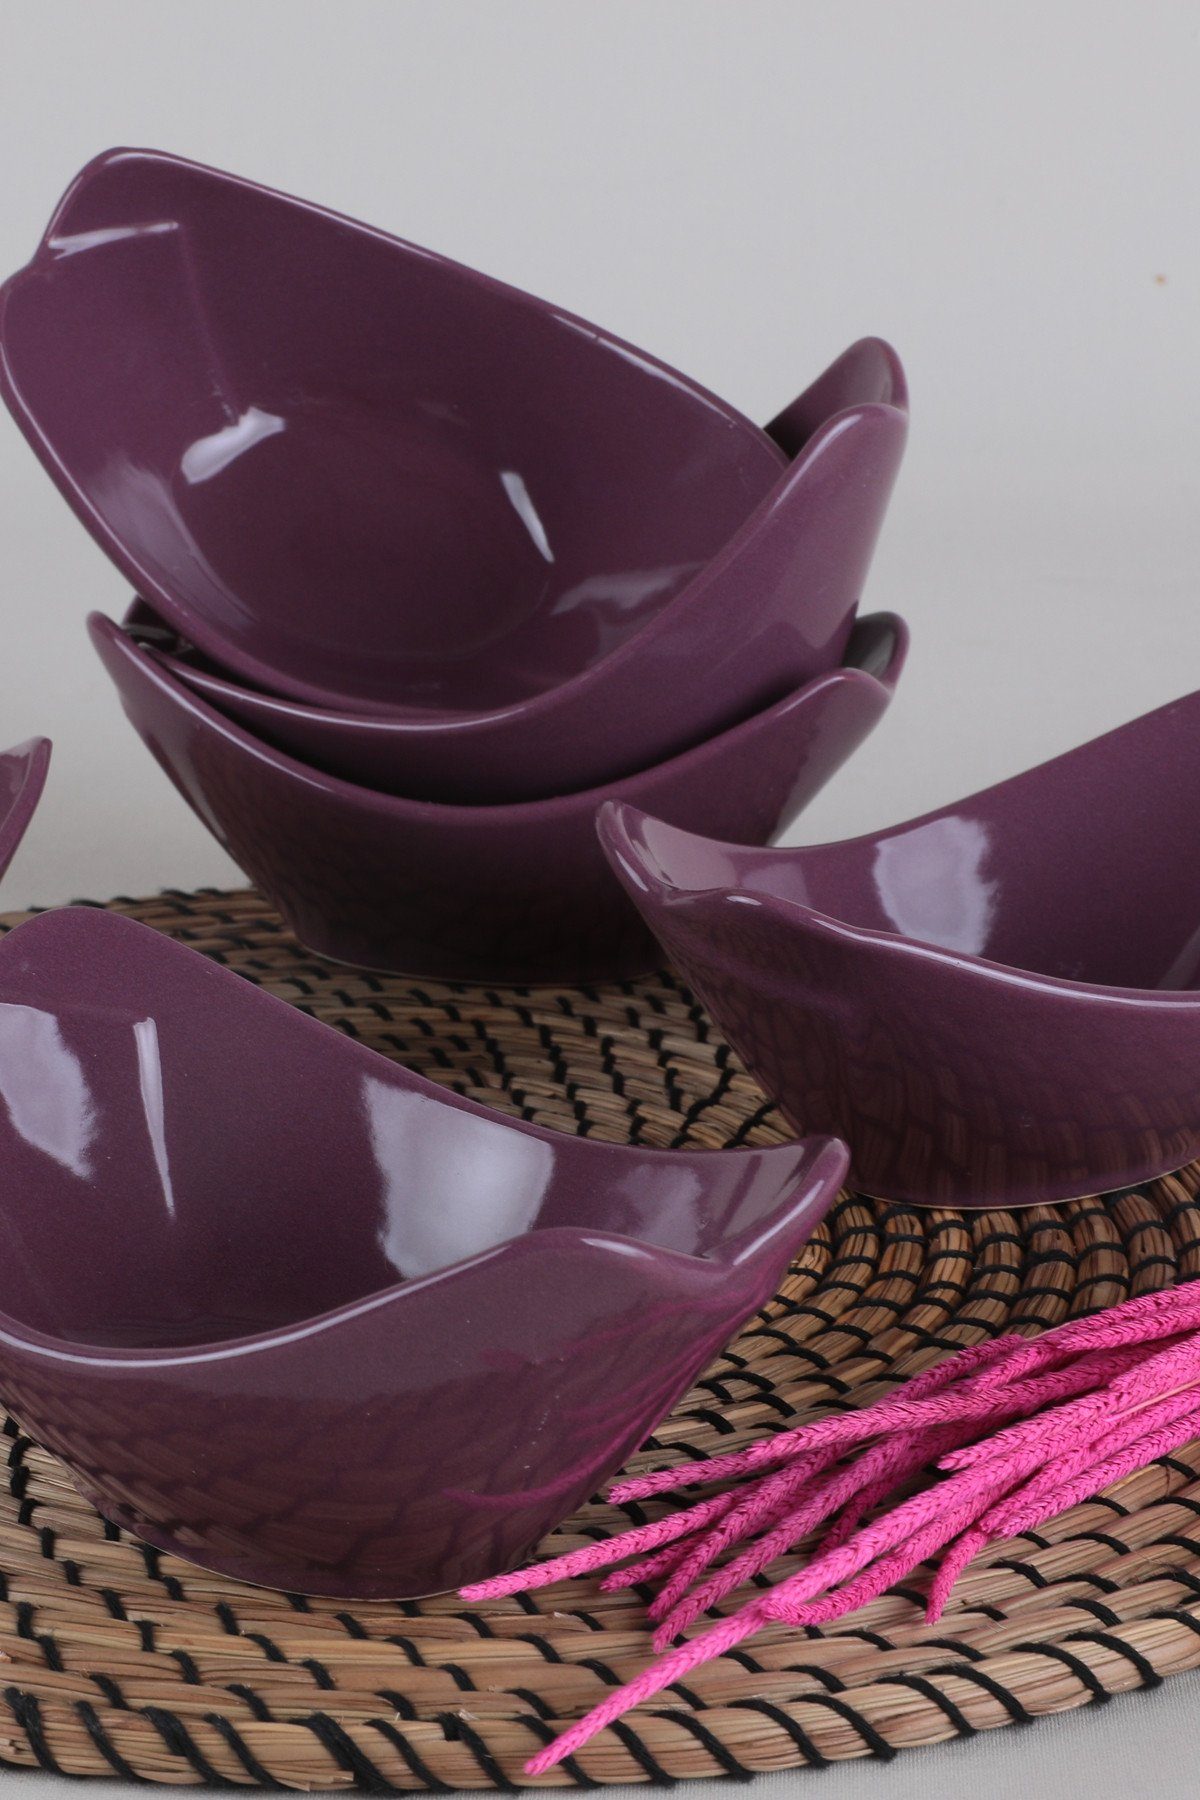 Hermia Concept Schüssel KRM1256, Violett, 100% Keramik Schüsseln